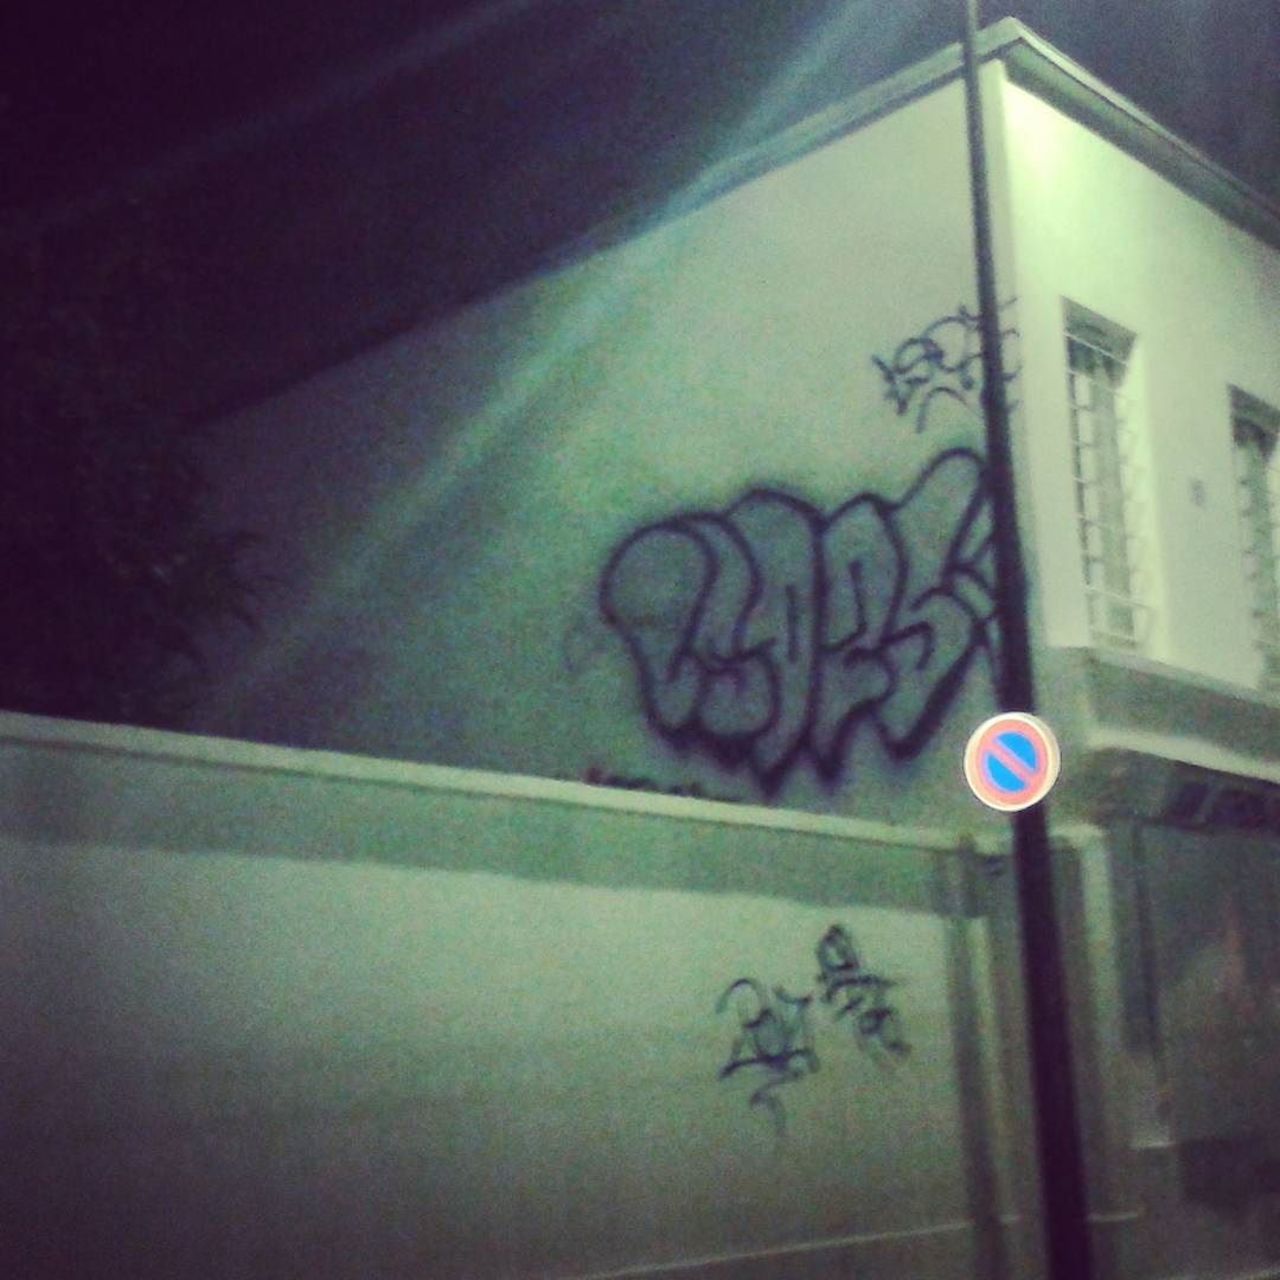 #Paris #graffiti photo by @ganjaog http://ift.tt/1POk046 #StreetArt https://t.co/waWVScKyGD